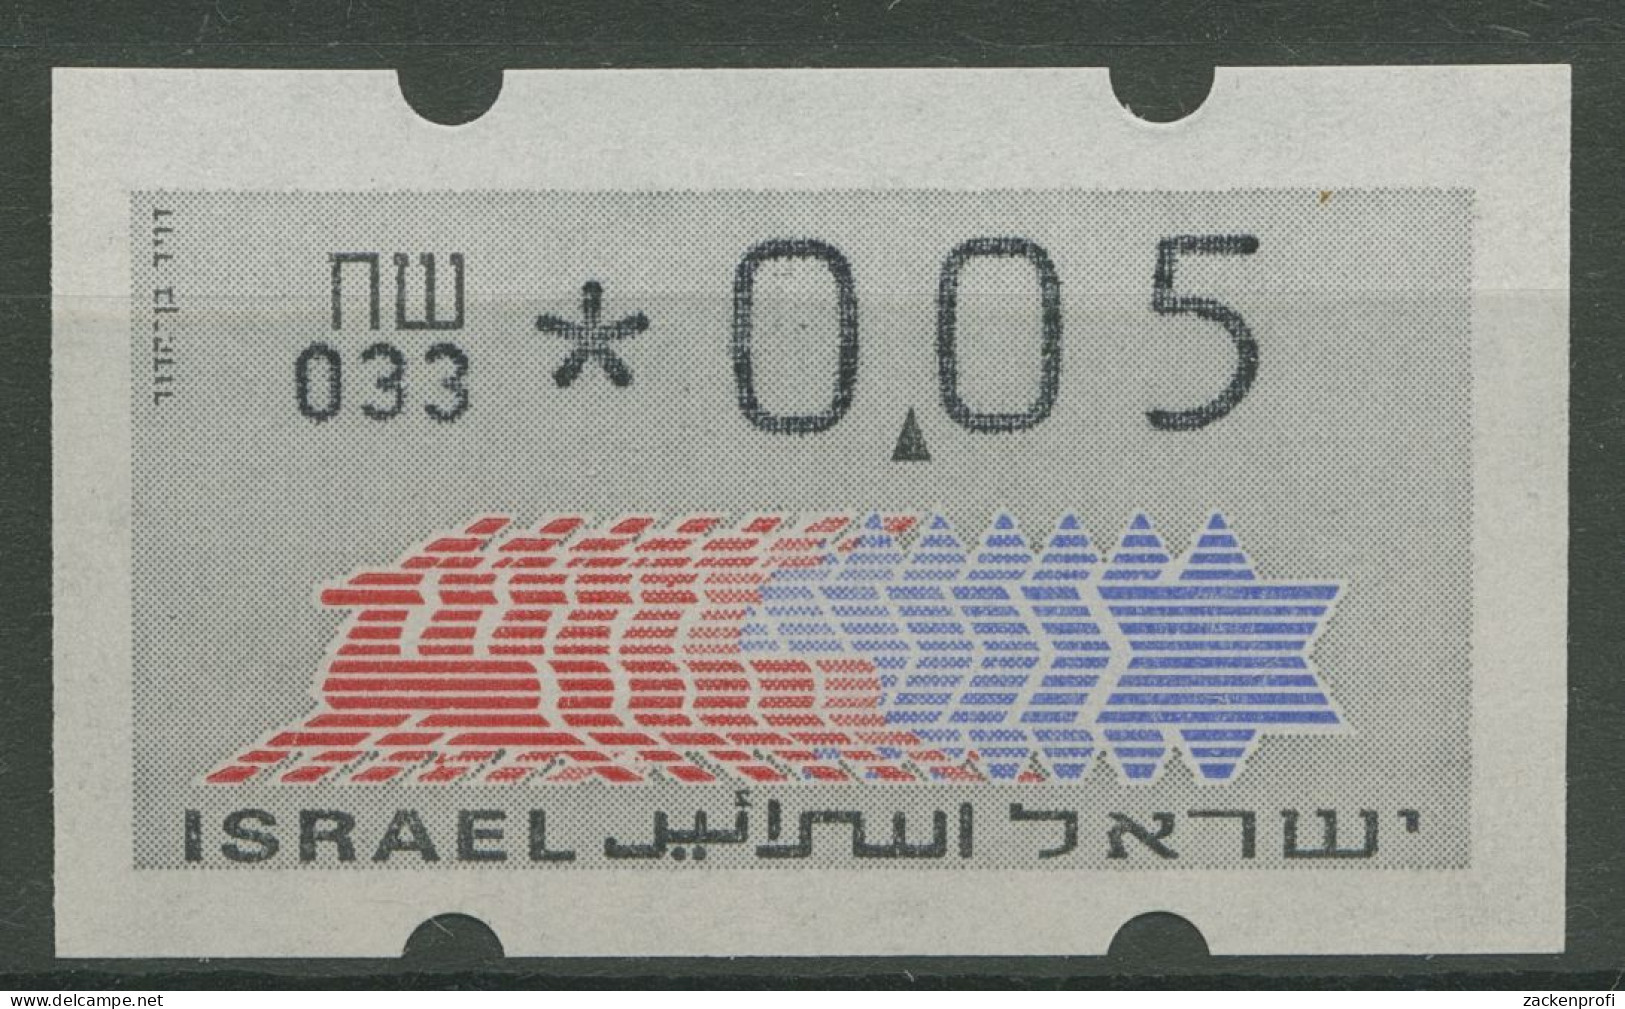 Israel ATM 1990 Hirsch Automat 033 Einzelwert ATM 3.3.33 Postfrisch - Vignettes D'affranchissement (Frama)